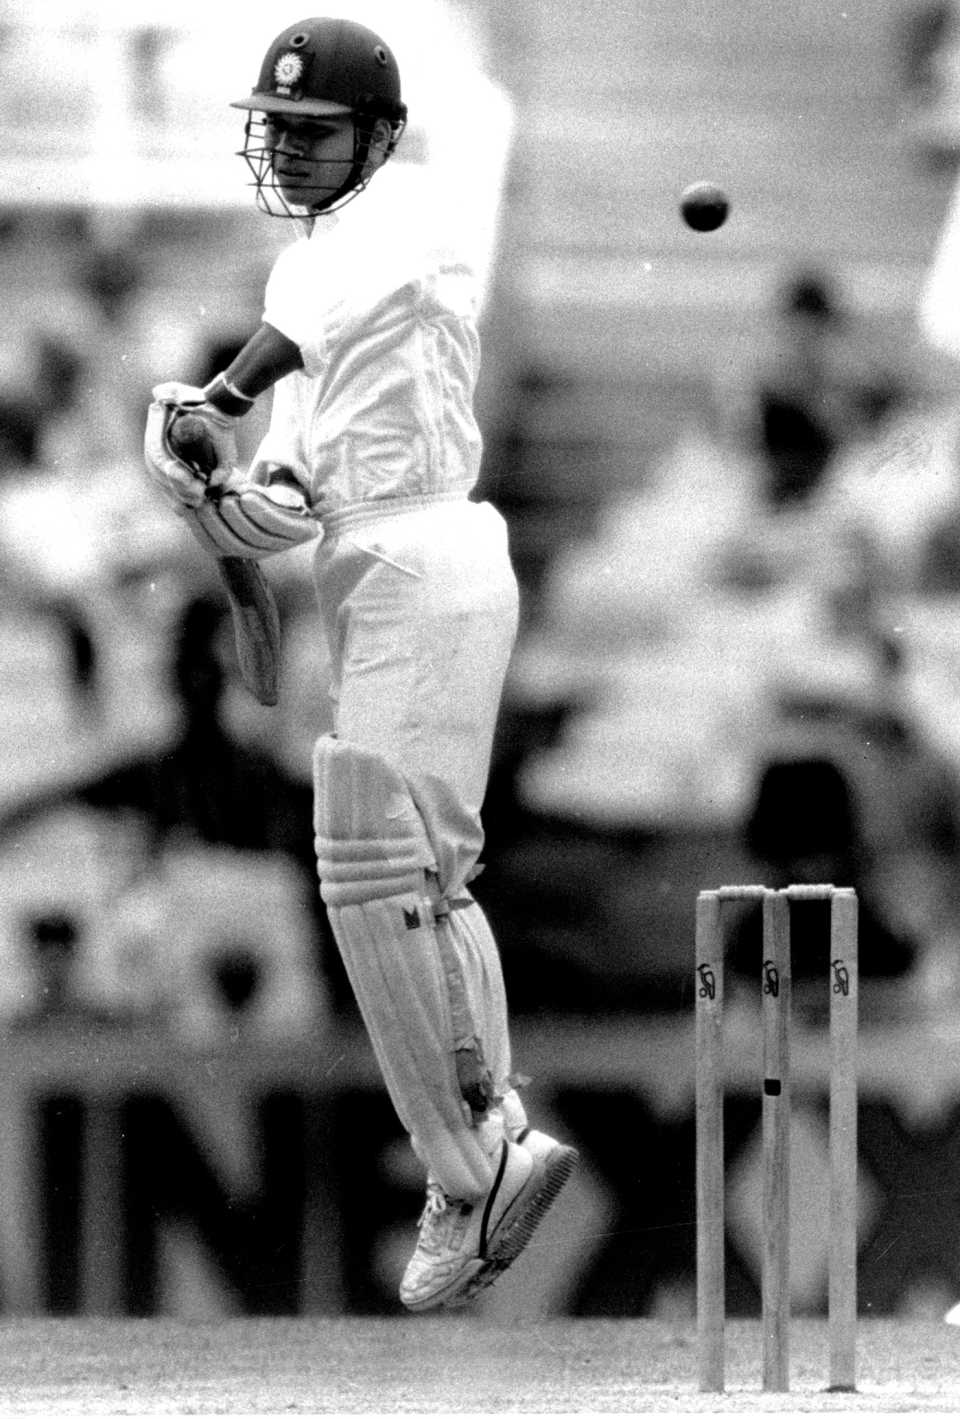 Sachin Tendulkar became the youngest batsman to score a Test hundred in Australia